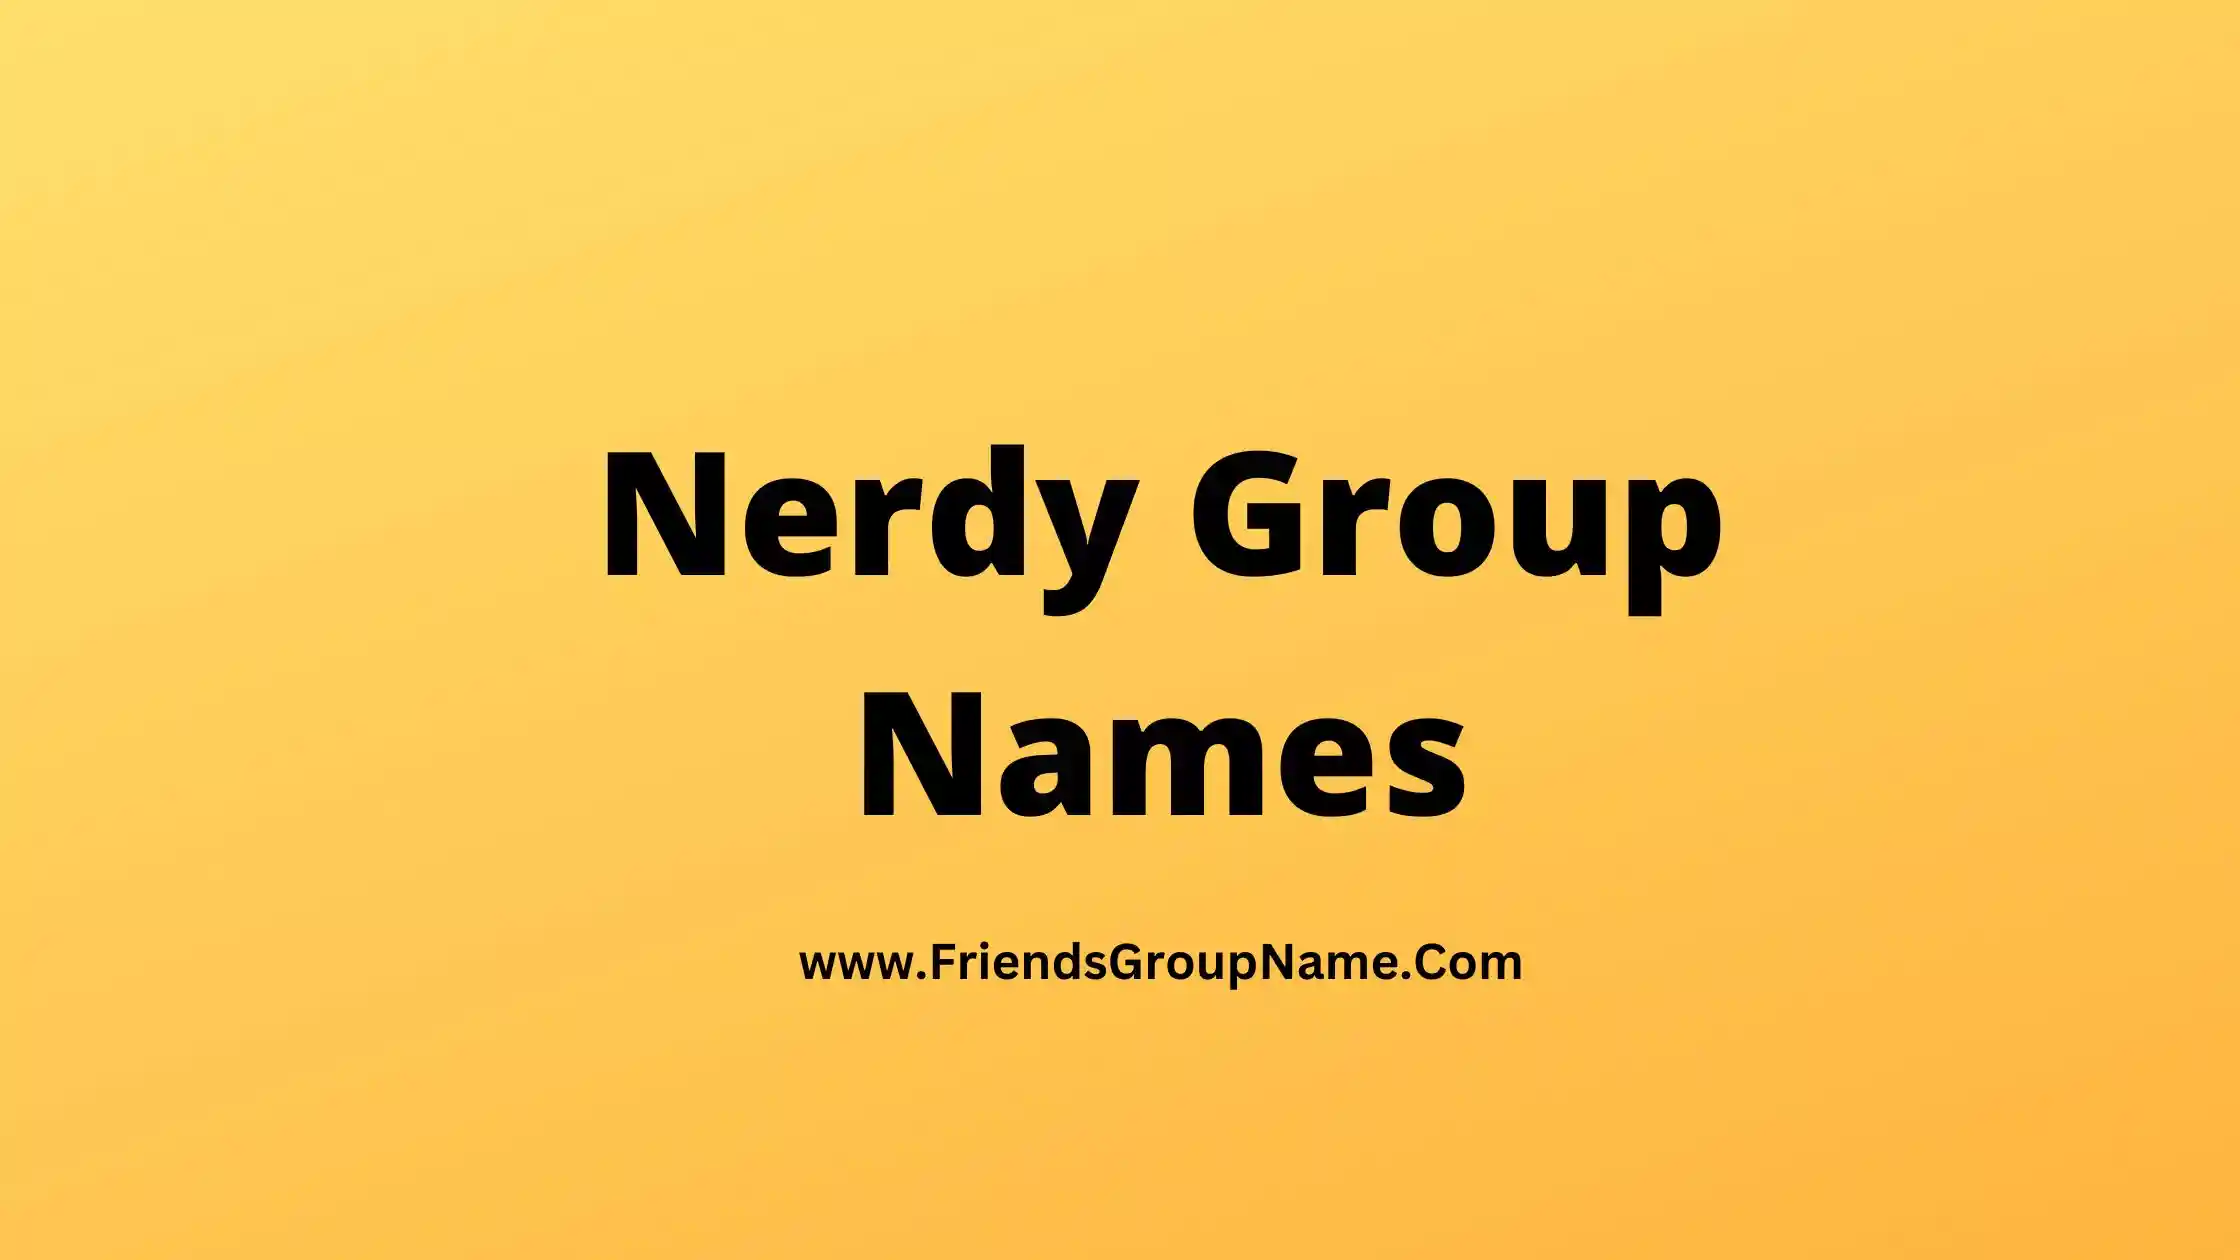 Nerdy Group Names